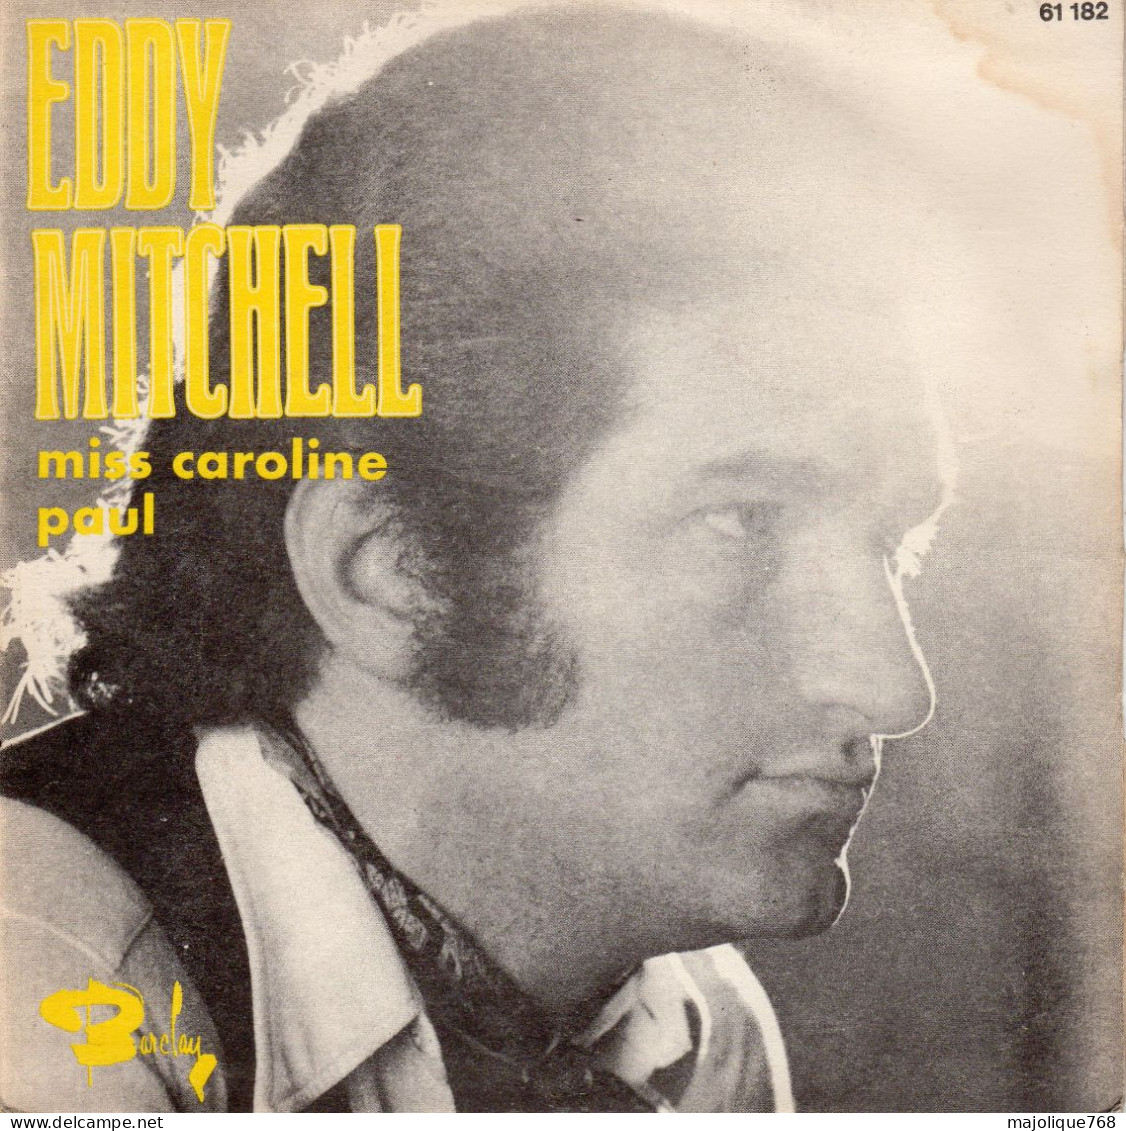 Disque De Eddy Mitchell - Miss Caroline - Barclay 61 182 - France 1969 - Disque Offert Par Antar Antarama 70 - Disco & Pop